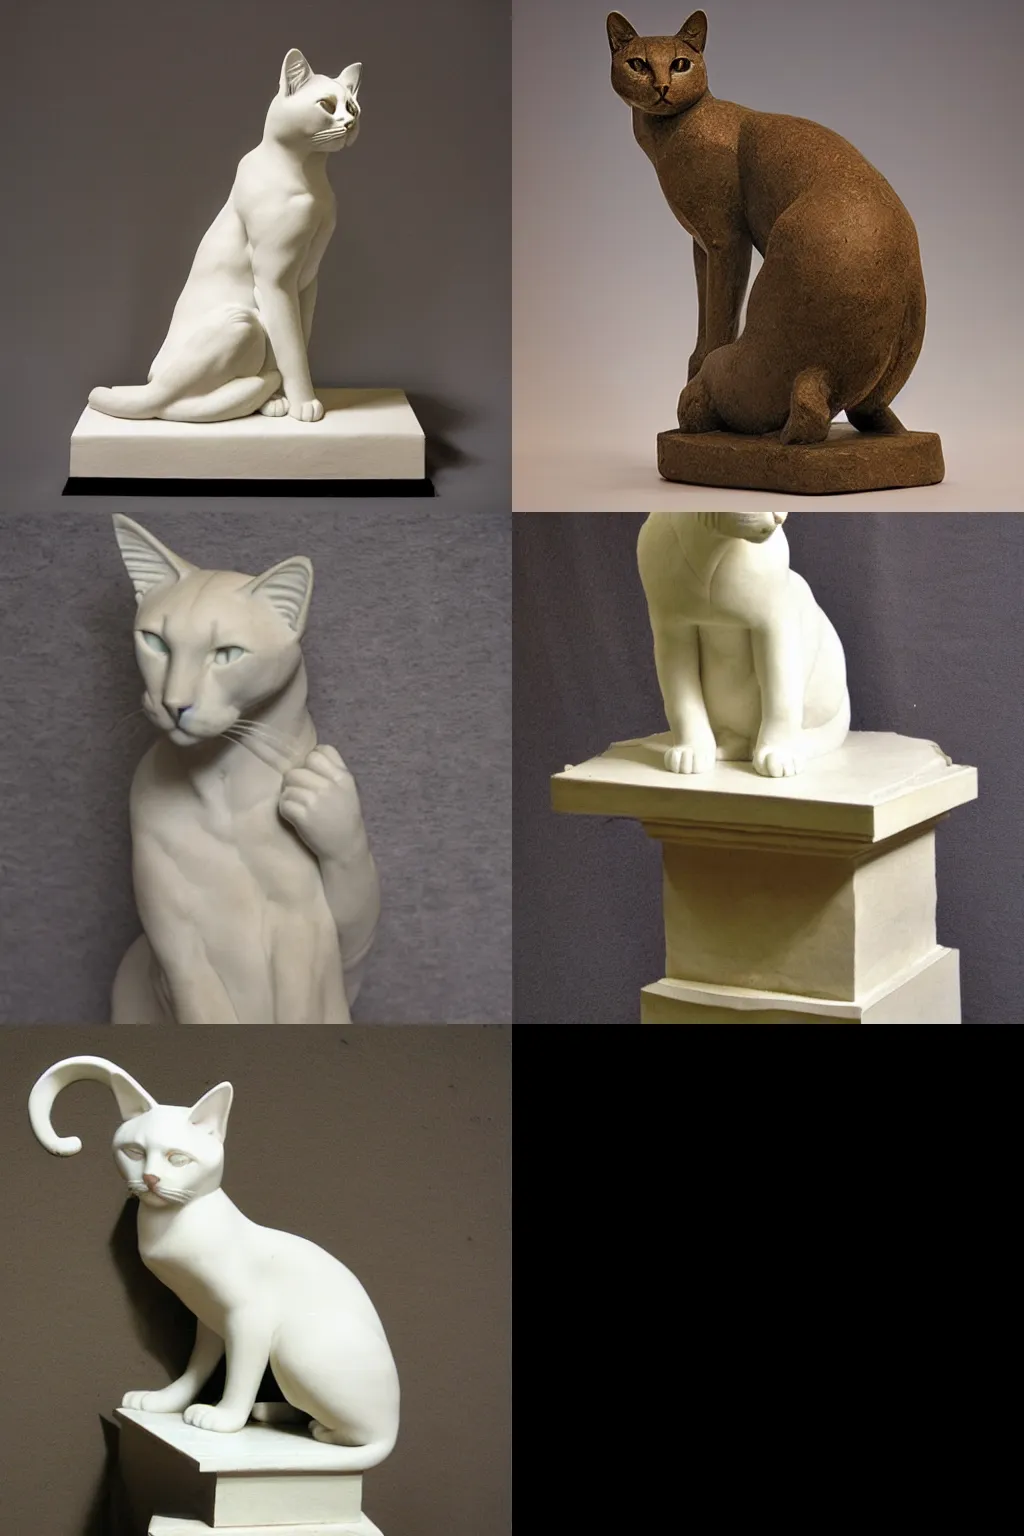 Prompt: A cat sculpture by Antonio Canova